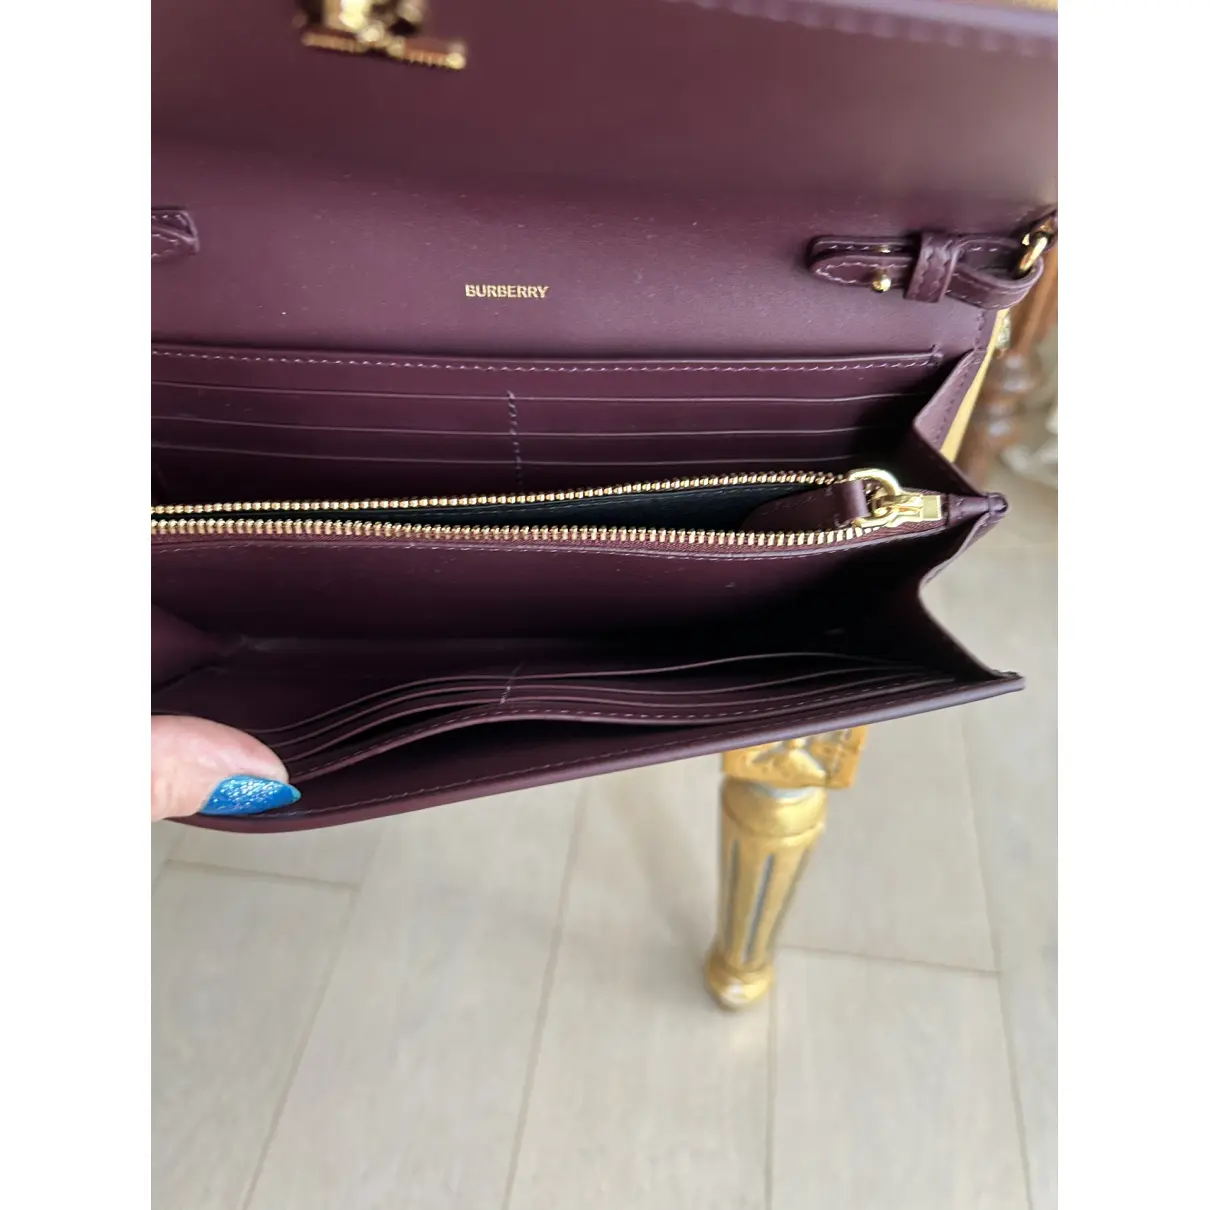 Buy Burberry Lola Clutch leather mini bag online